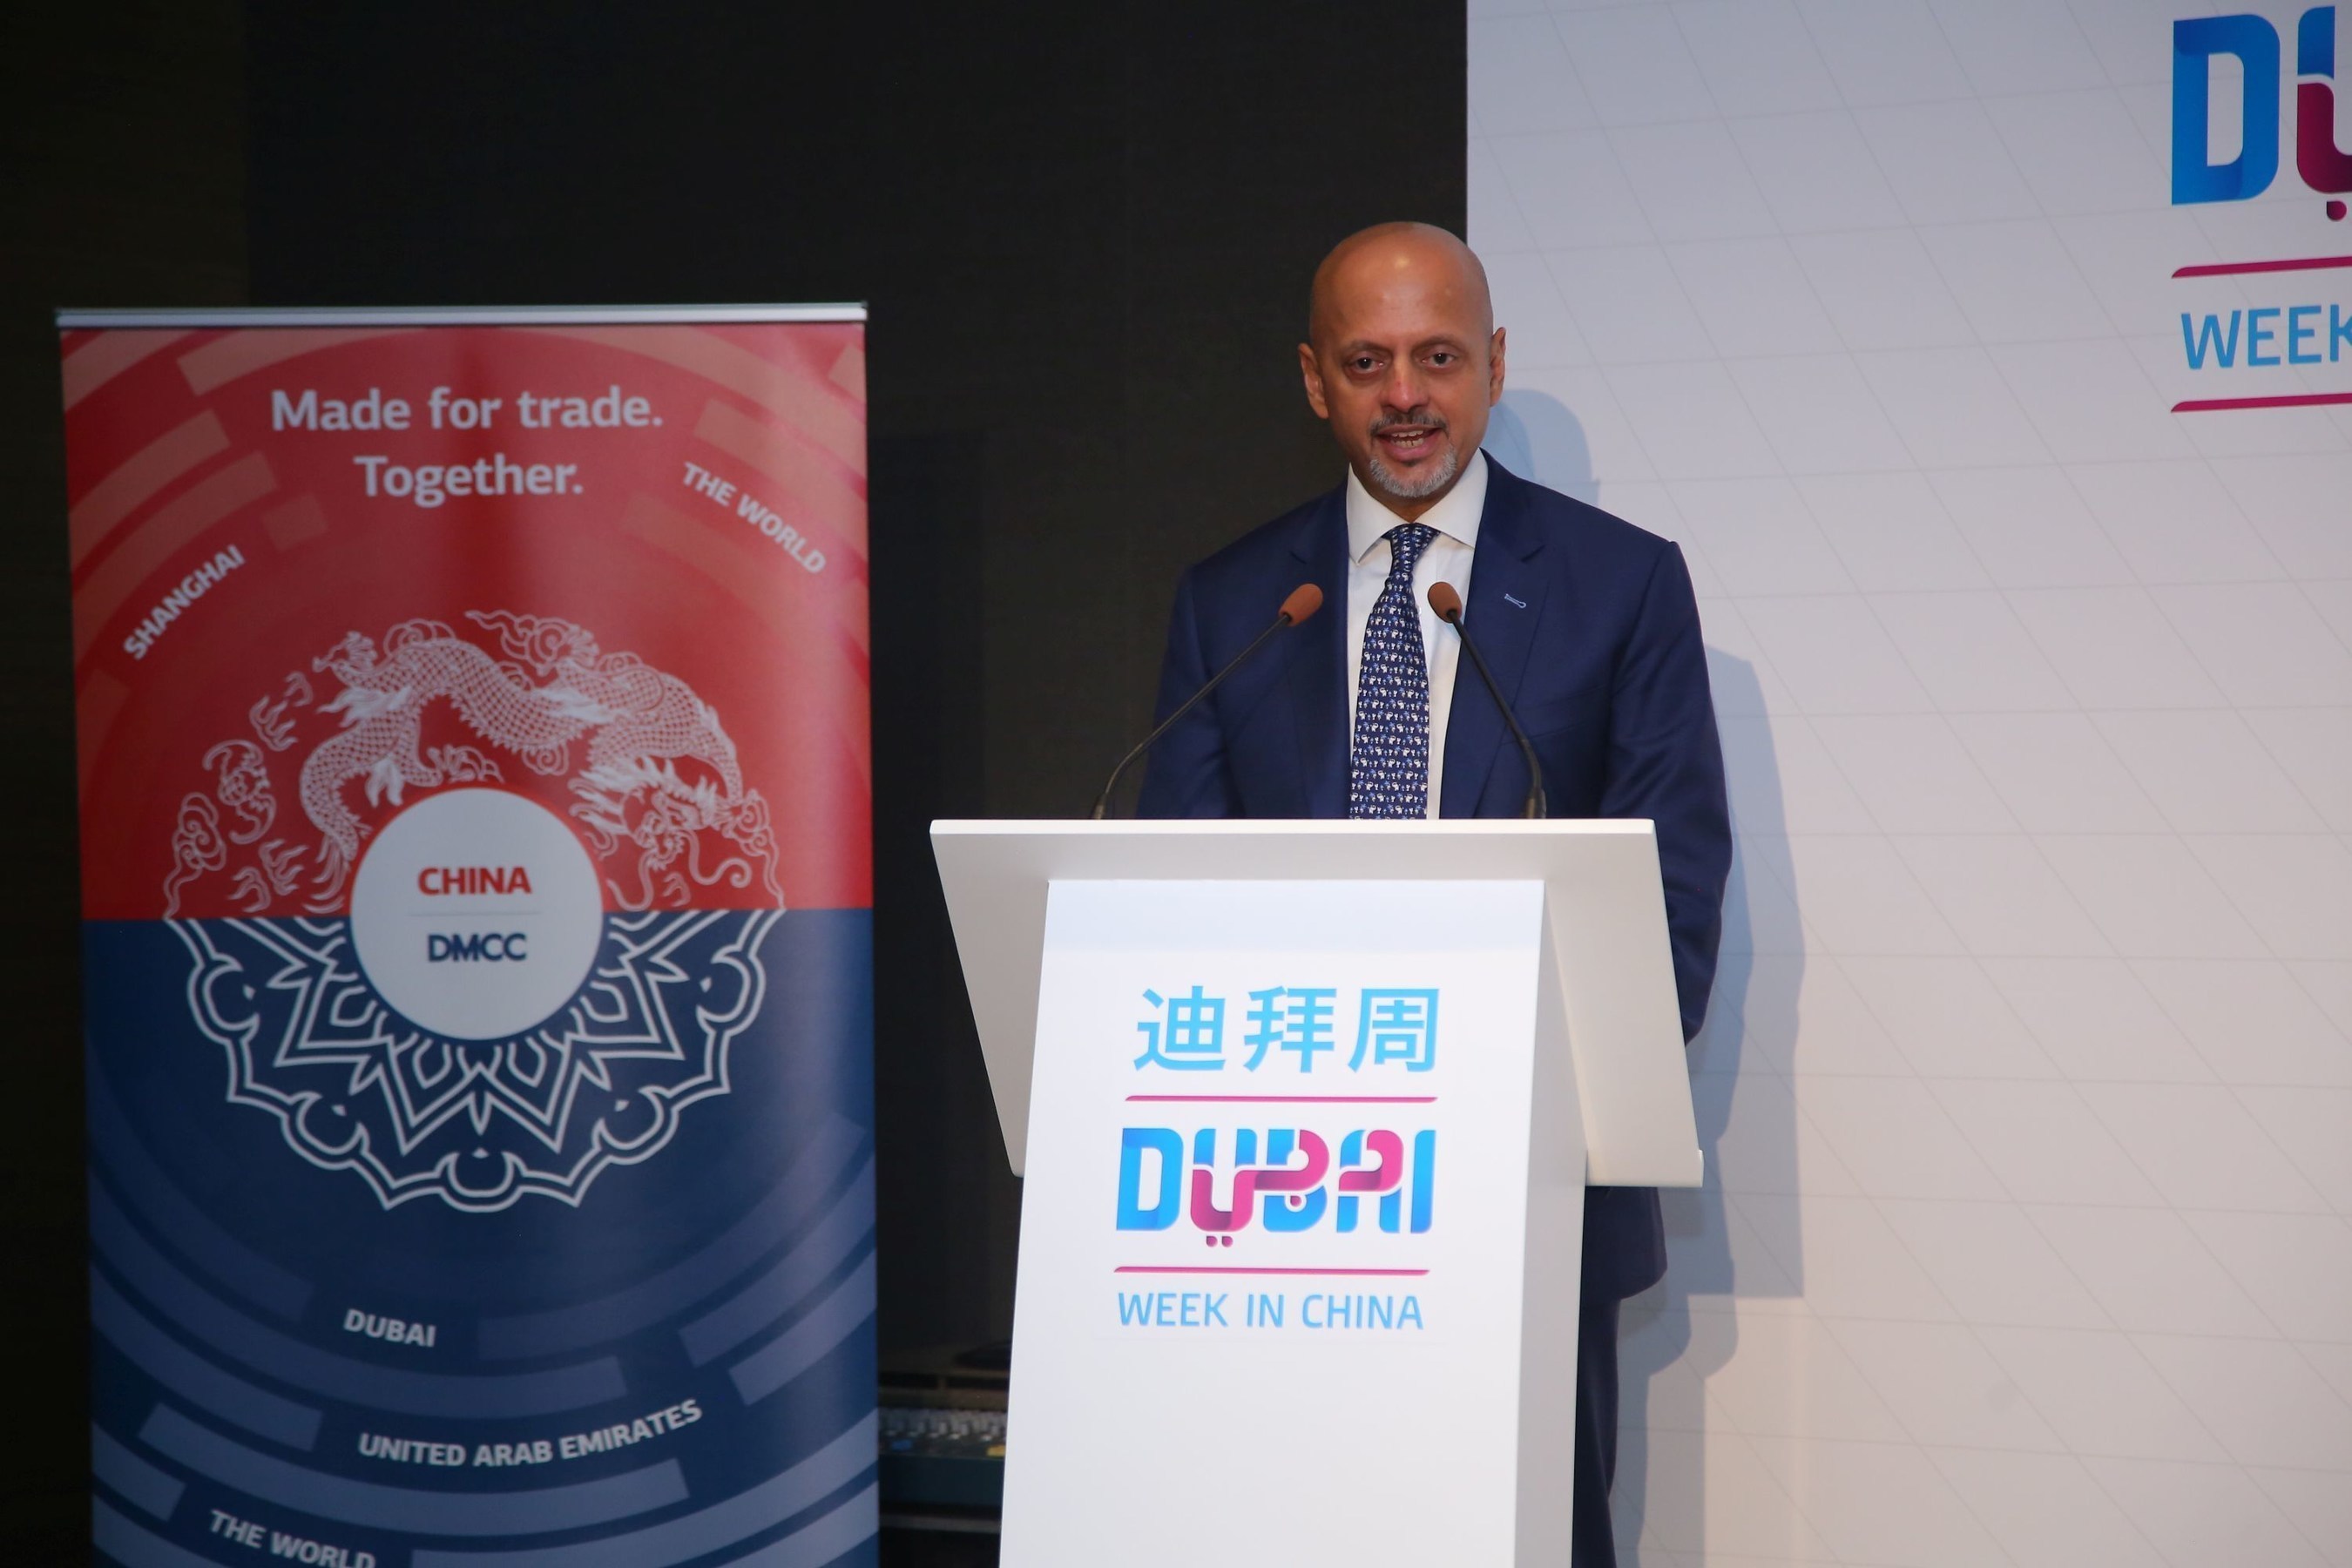 DMCC CEO Gautam Sashittal Welcome Address at Dubai Week in China (PRNewsFoto/DMCC)